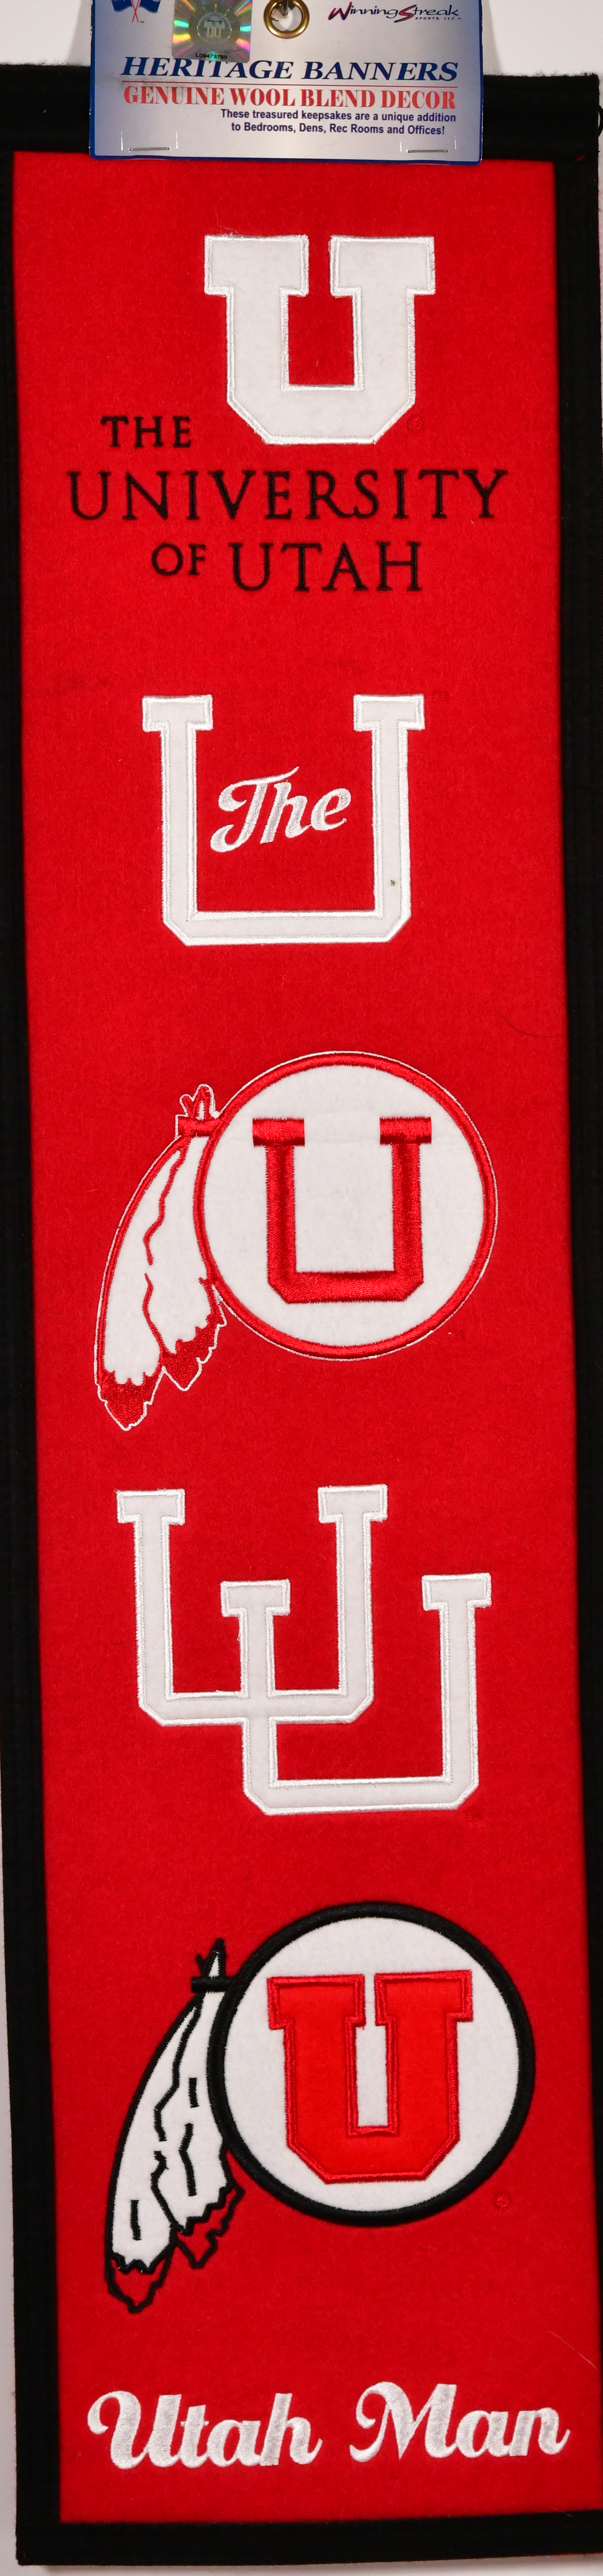 University of Utah Heritage Banner